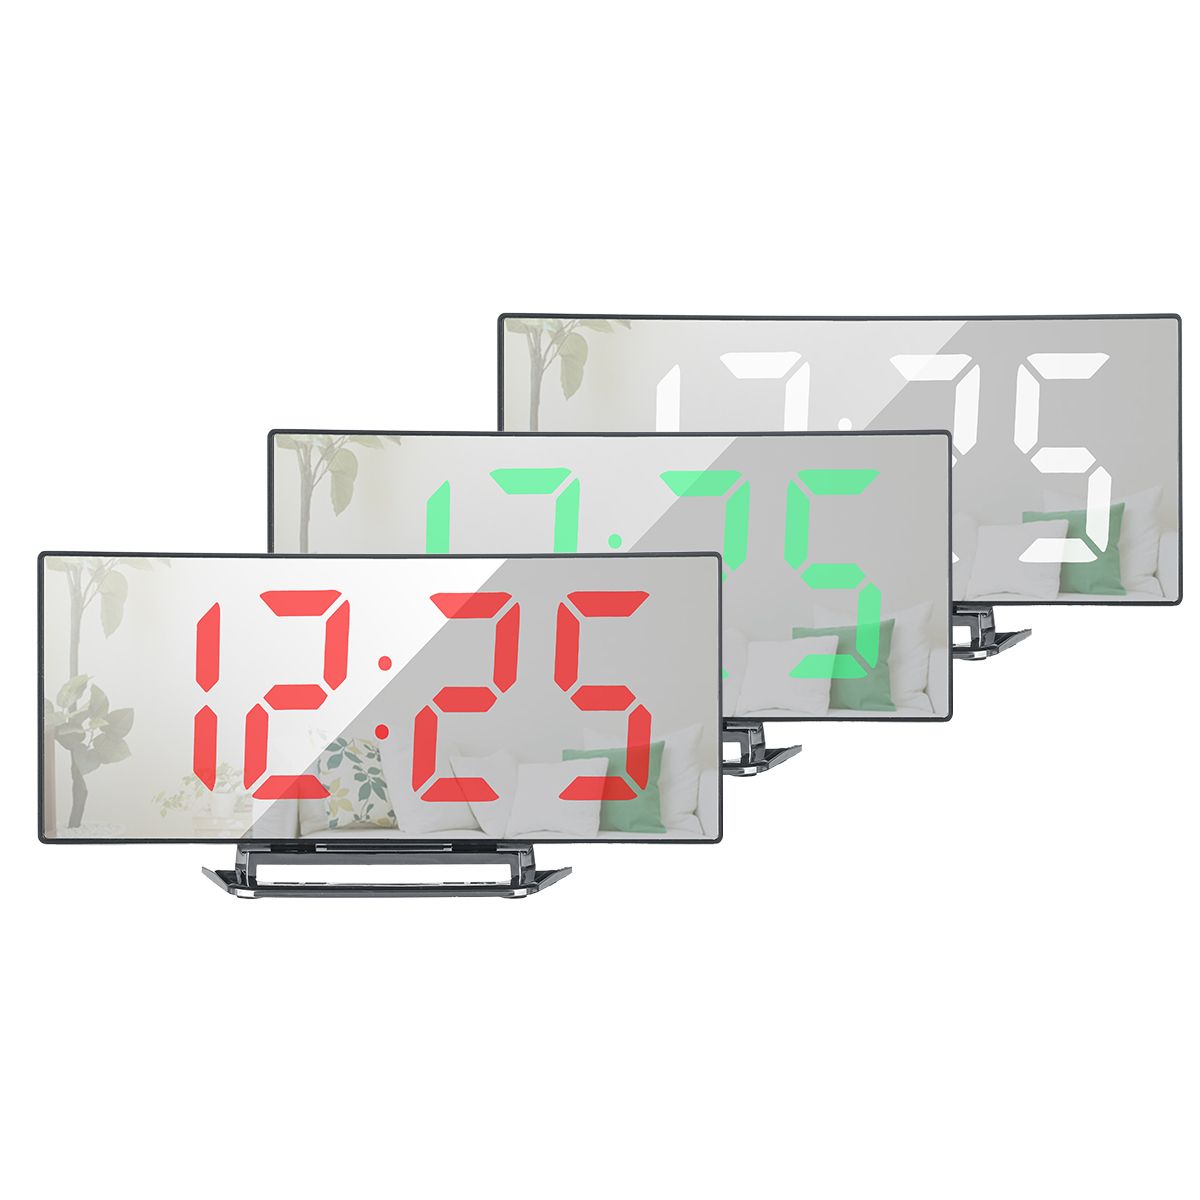 Curved-LED-Digital-Alarm-Clock-Mirror-Table-Display-Temperature-Snooze-USB-Room-1639017